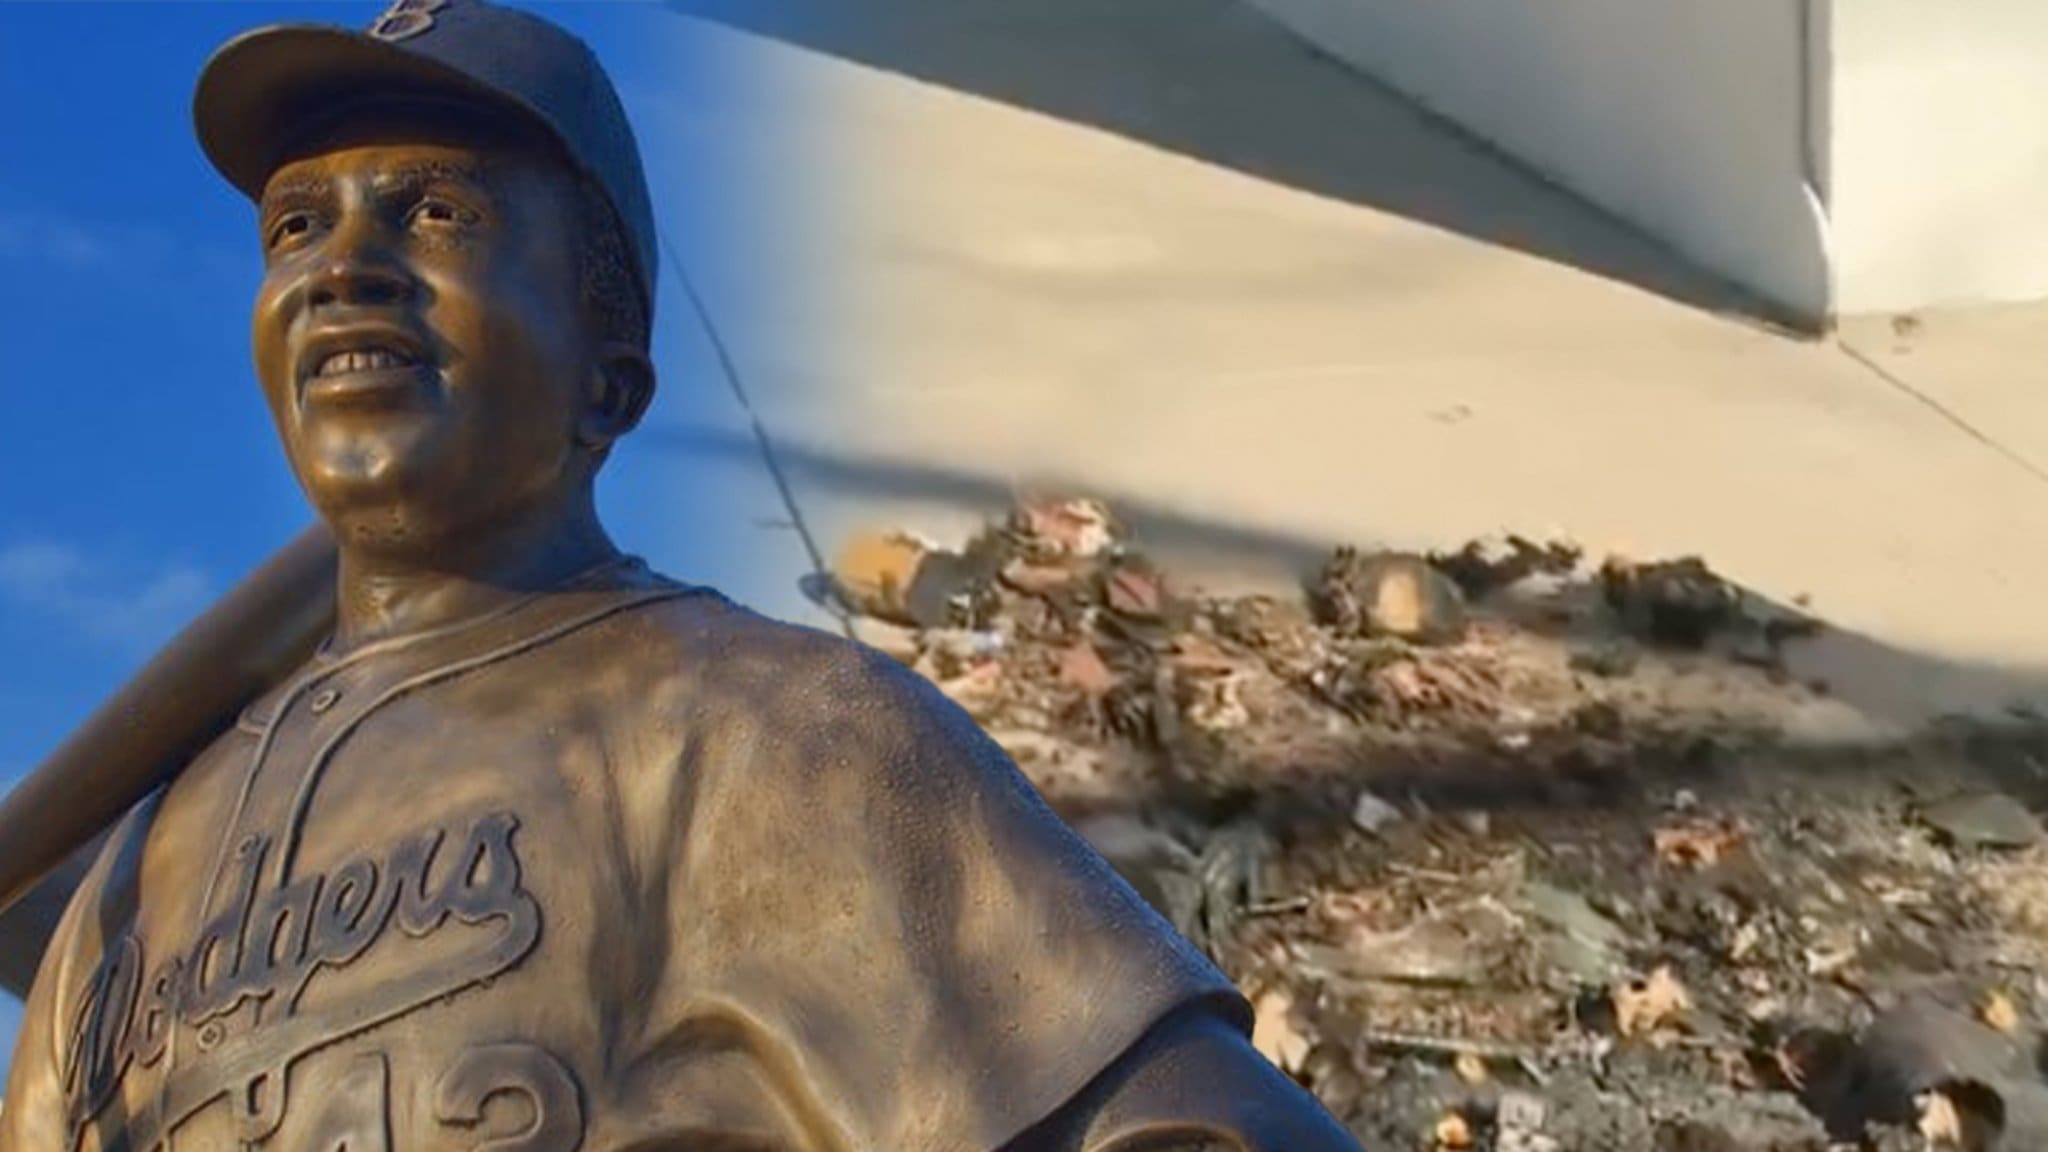 Jackie Robinson Statue Stolen From Kansas Park Found Broken, Burned in Park Trash Can